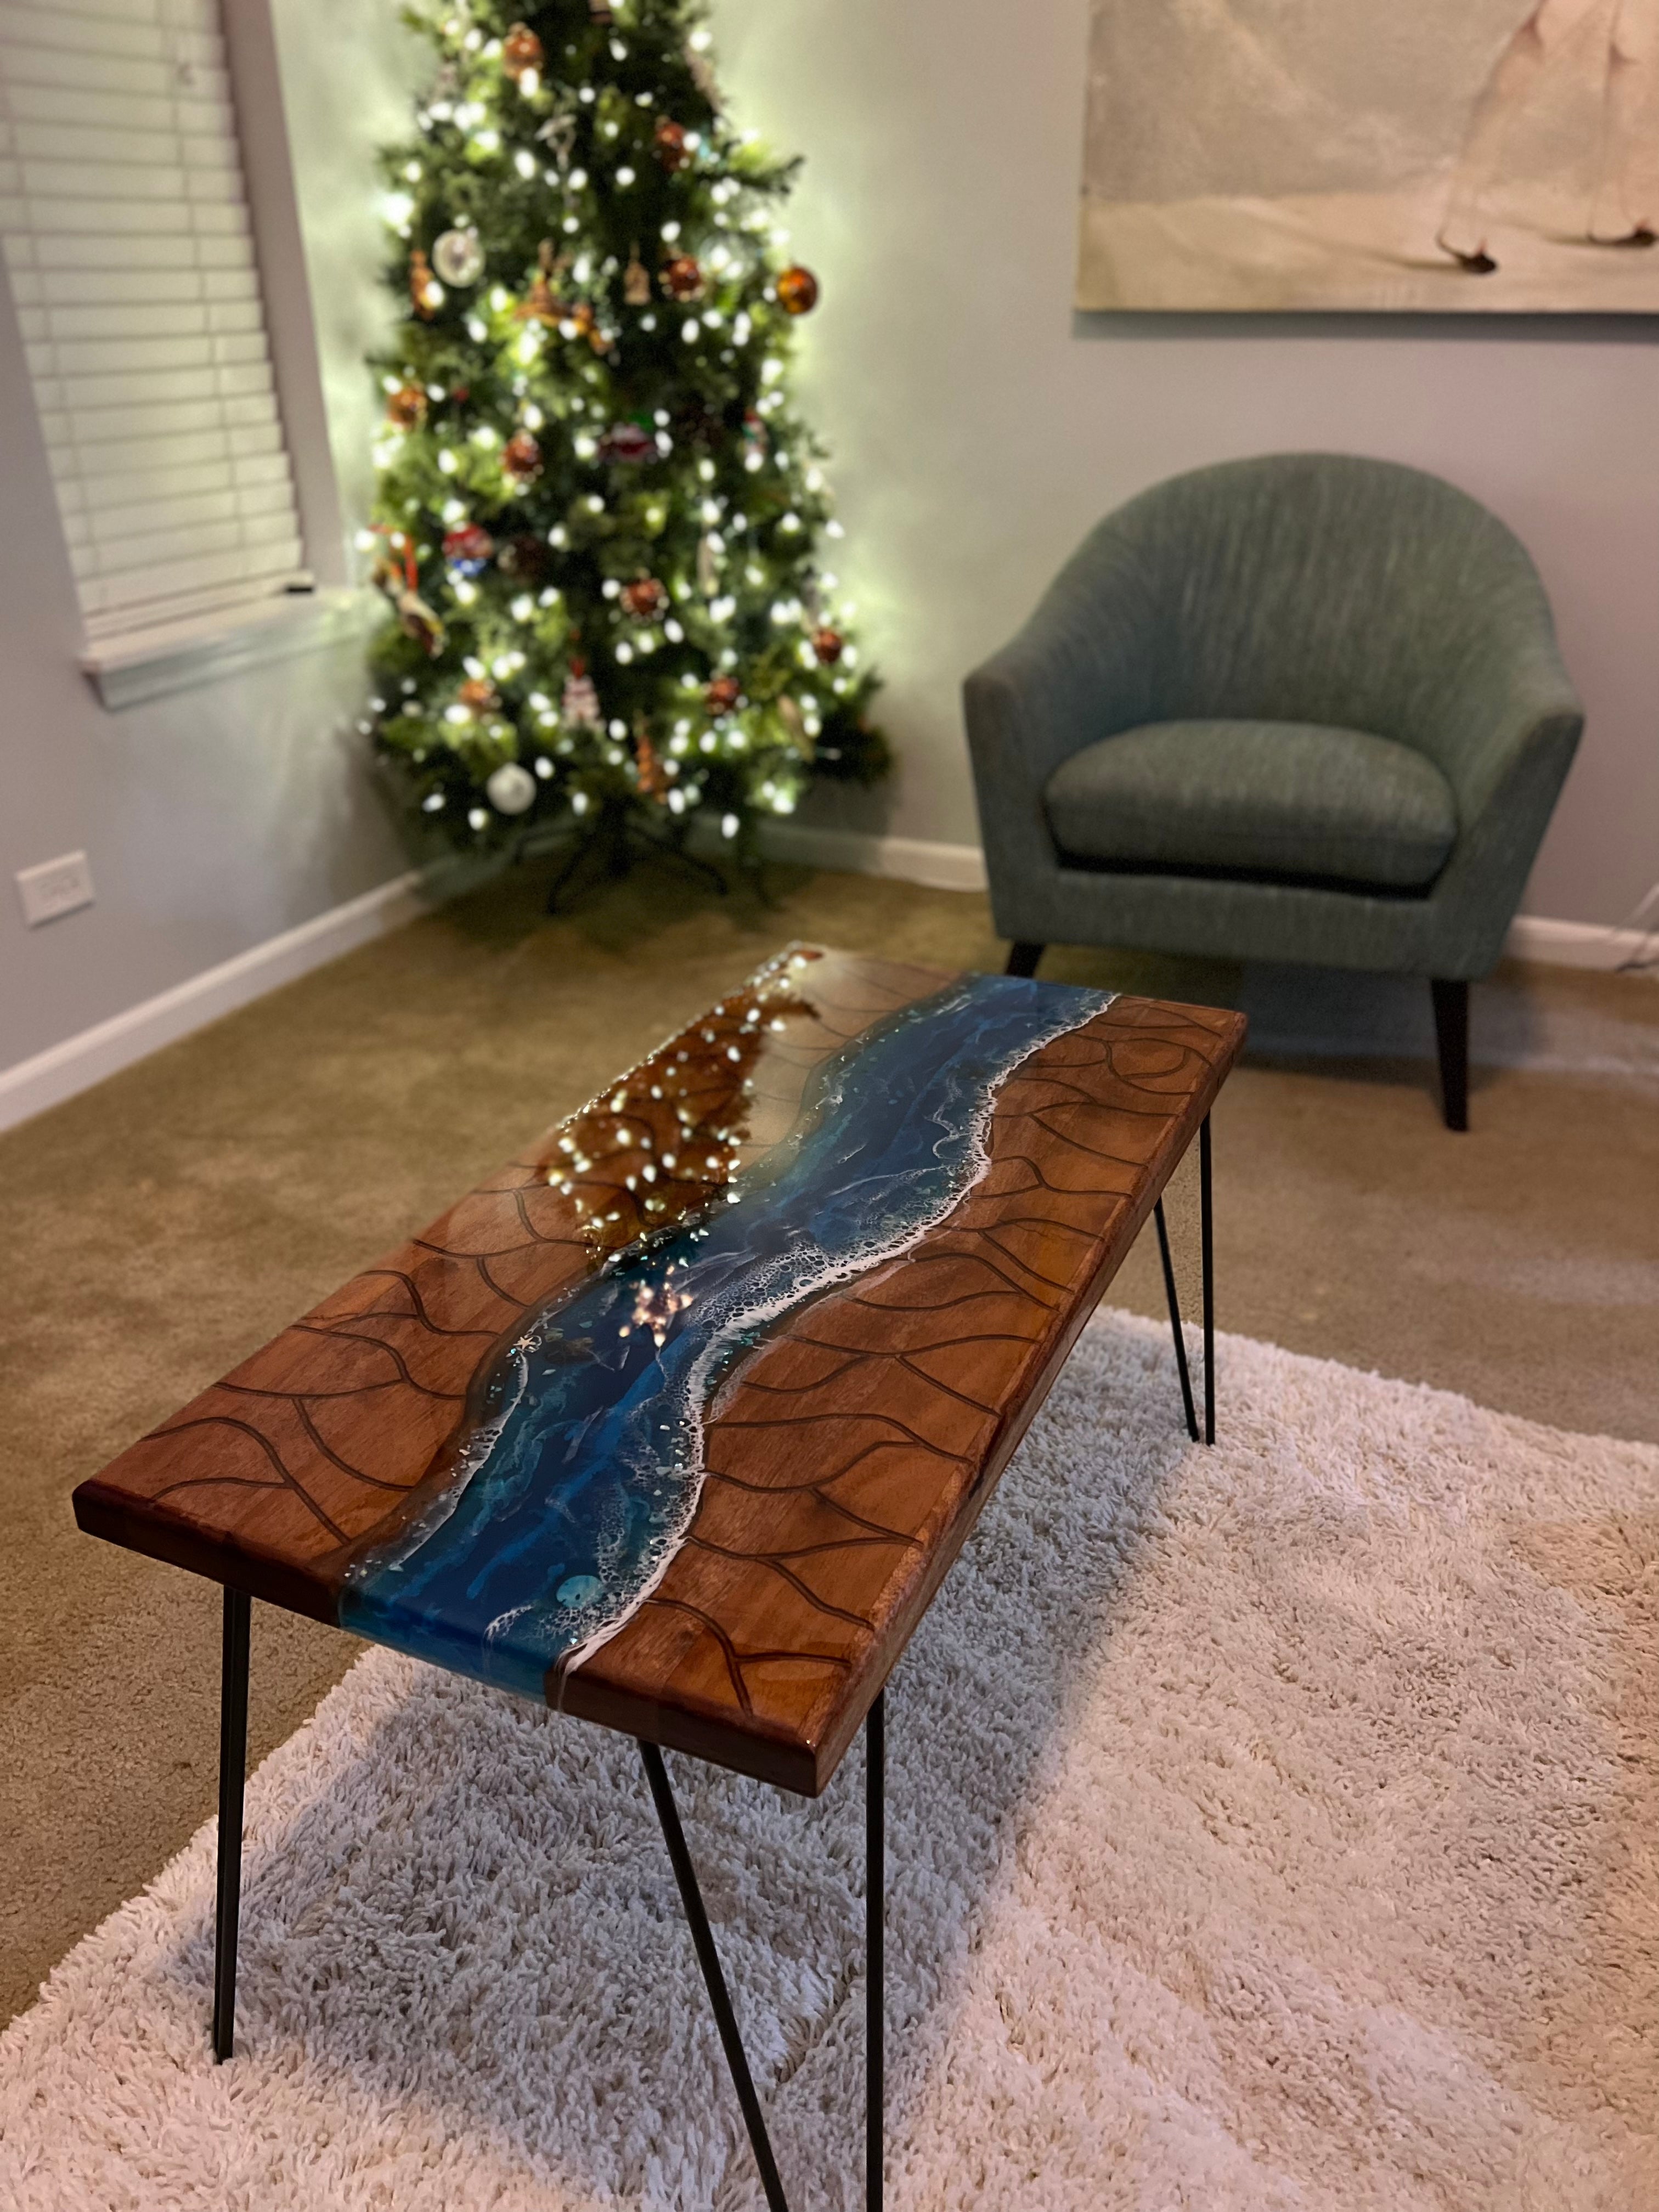 Custom Epoxy Resin Art Design River Table Wooden Tea Table Log